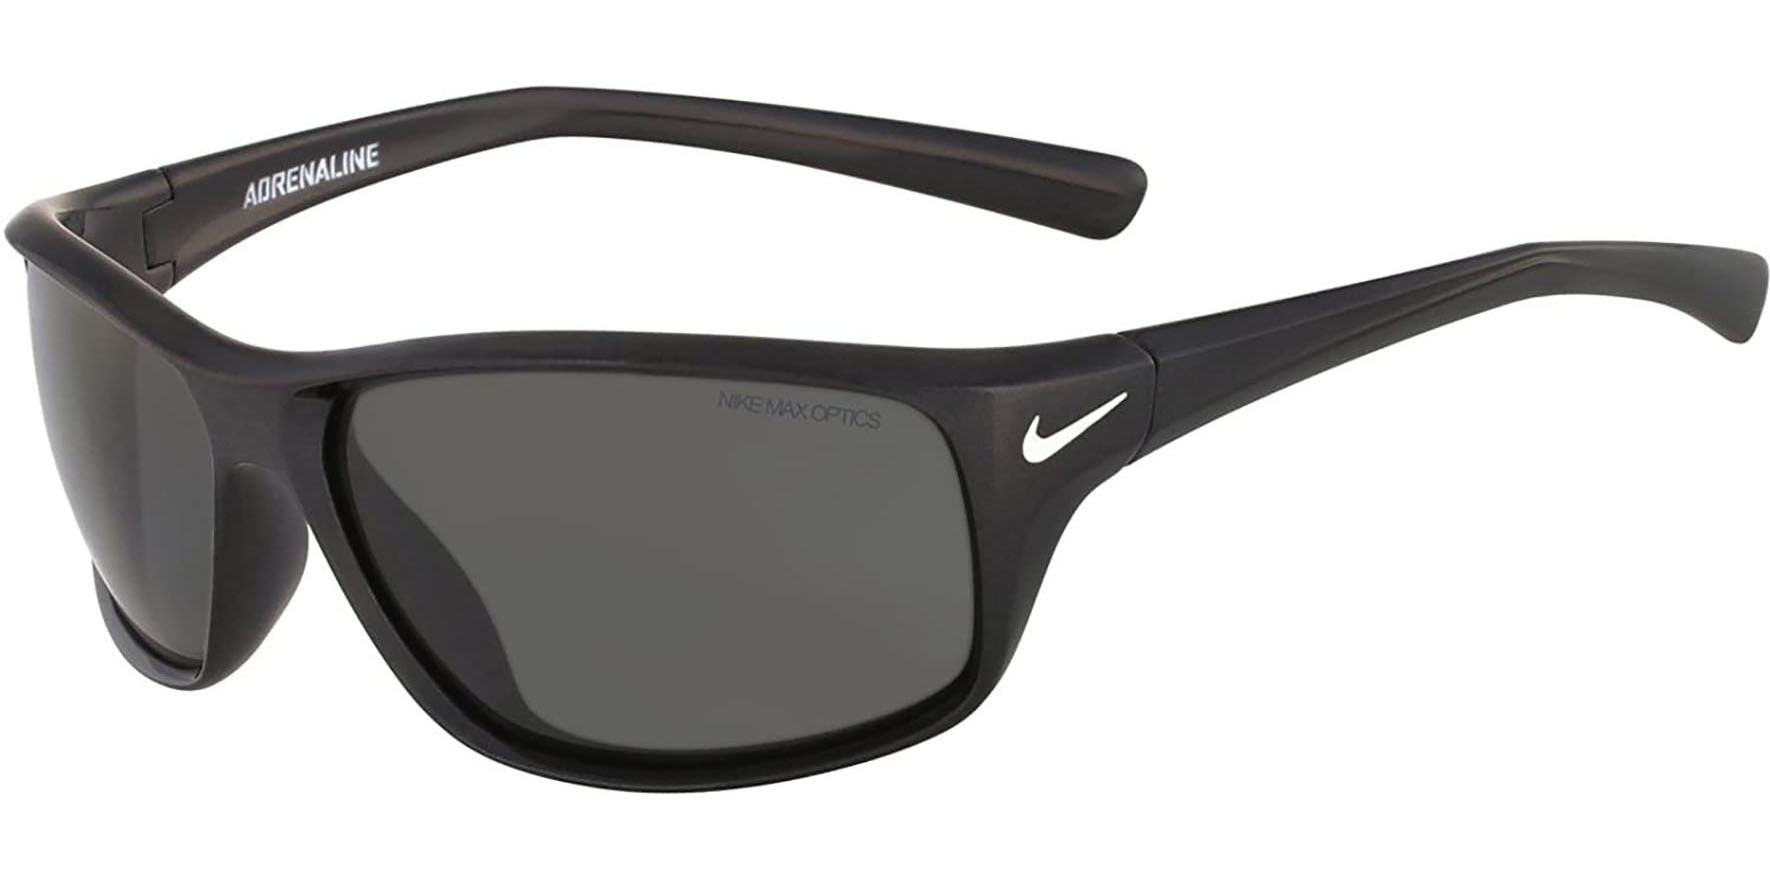 Nike Non-Polarized Sunglasses: Adrenaline Stealth, Aero Drift, Tailwind & More $35 - Free Shipping